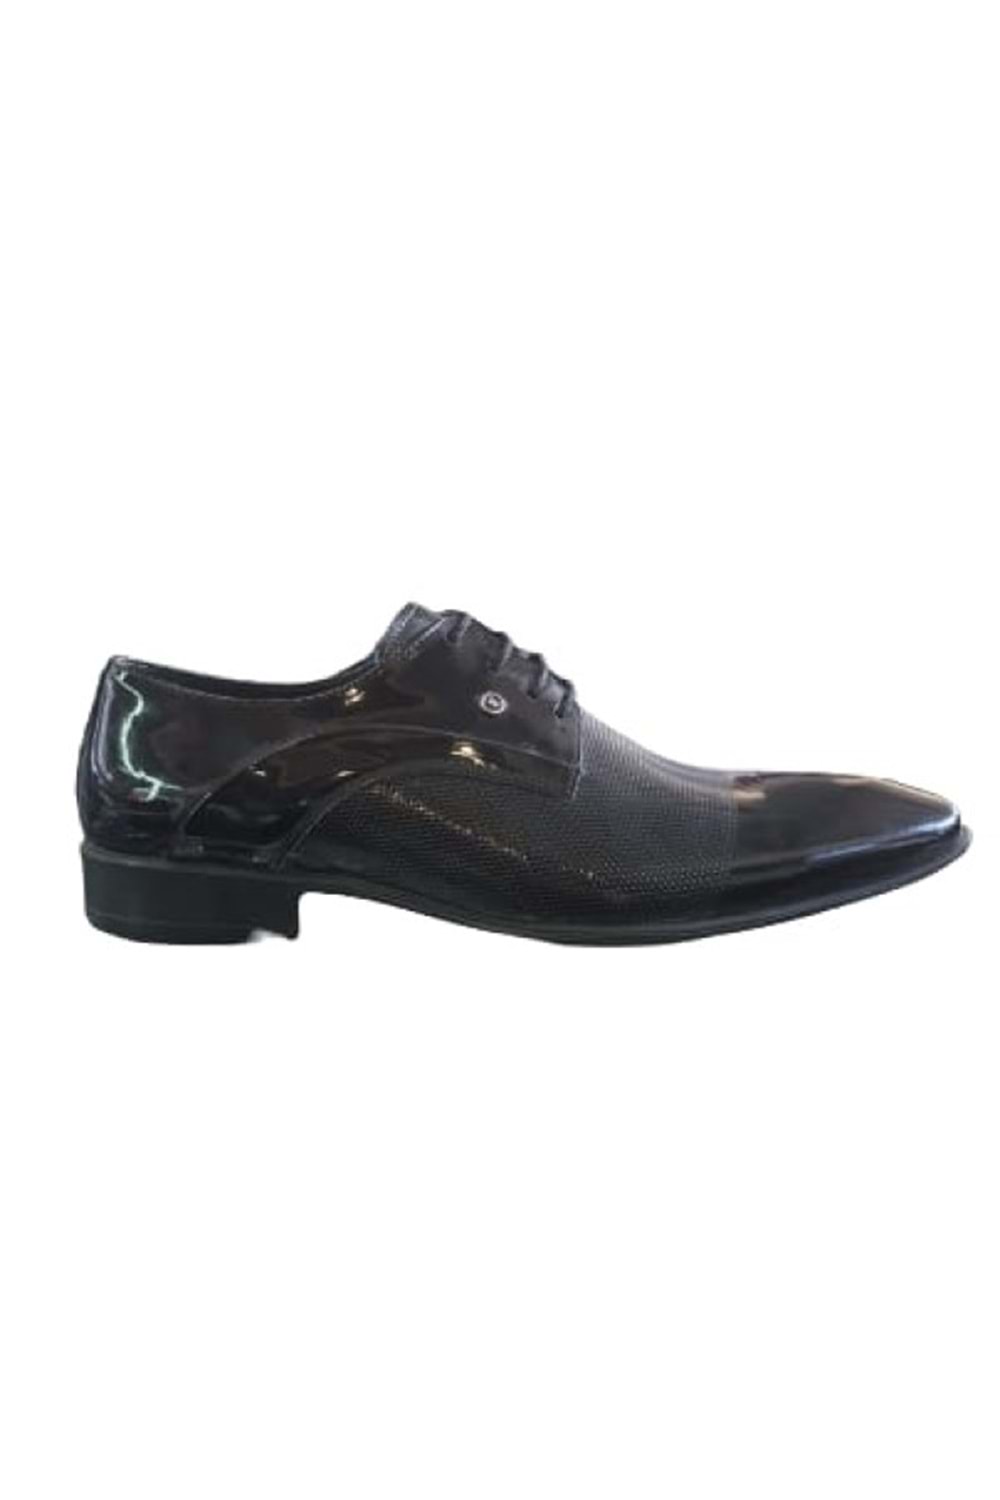 Wonder 2155 Erkek Rugan Klasik Ayakkabı - Siyah